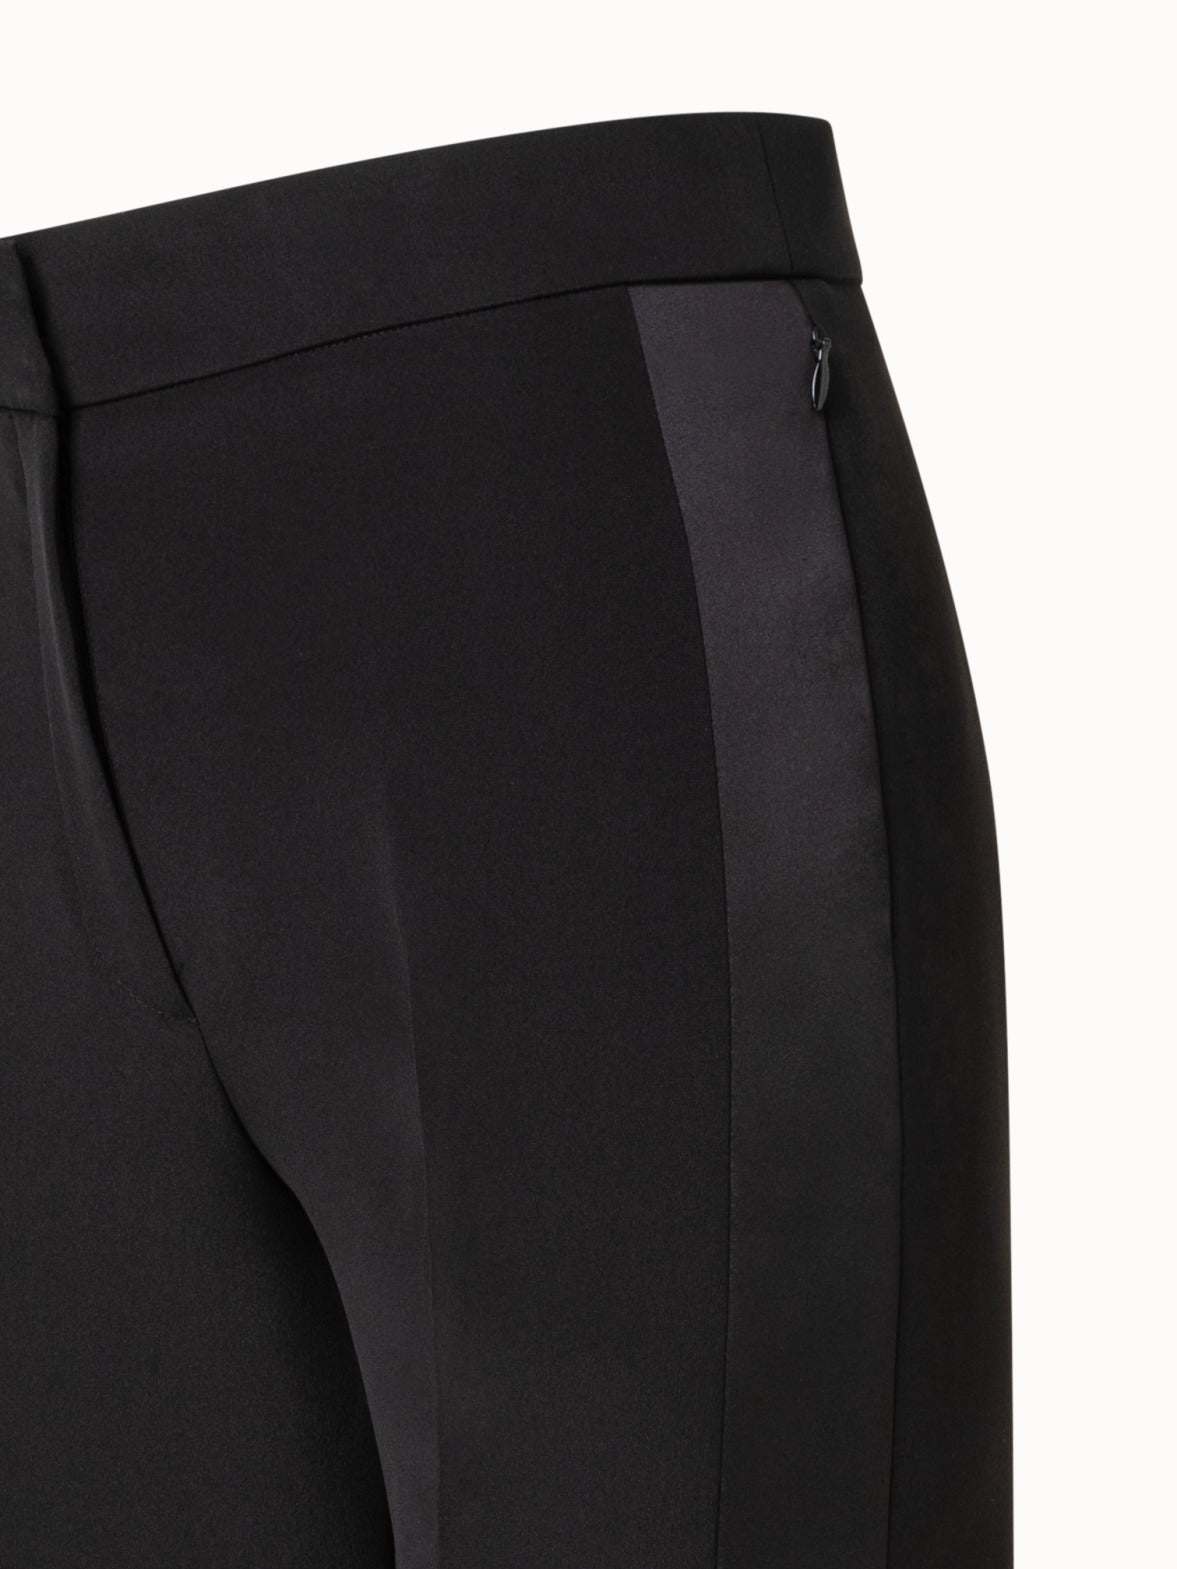 Black Silk Pants Sandwashed Silk Trousers High-waisted Black Silk Pants  Silk Straight-leg Pants Silk Trousers 